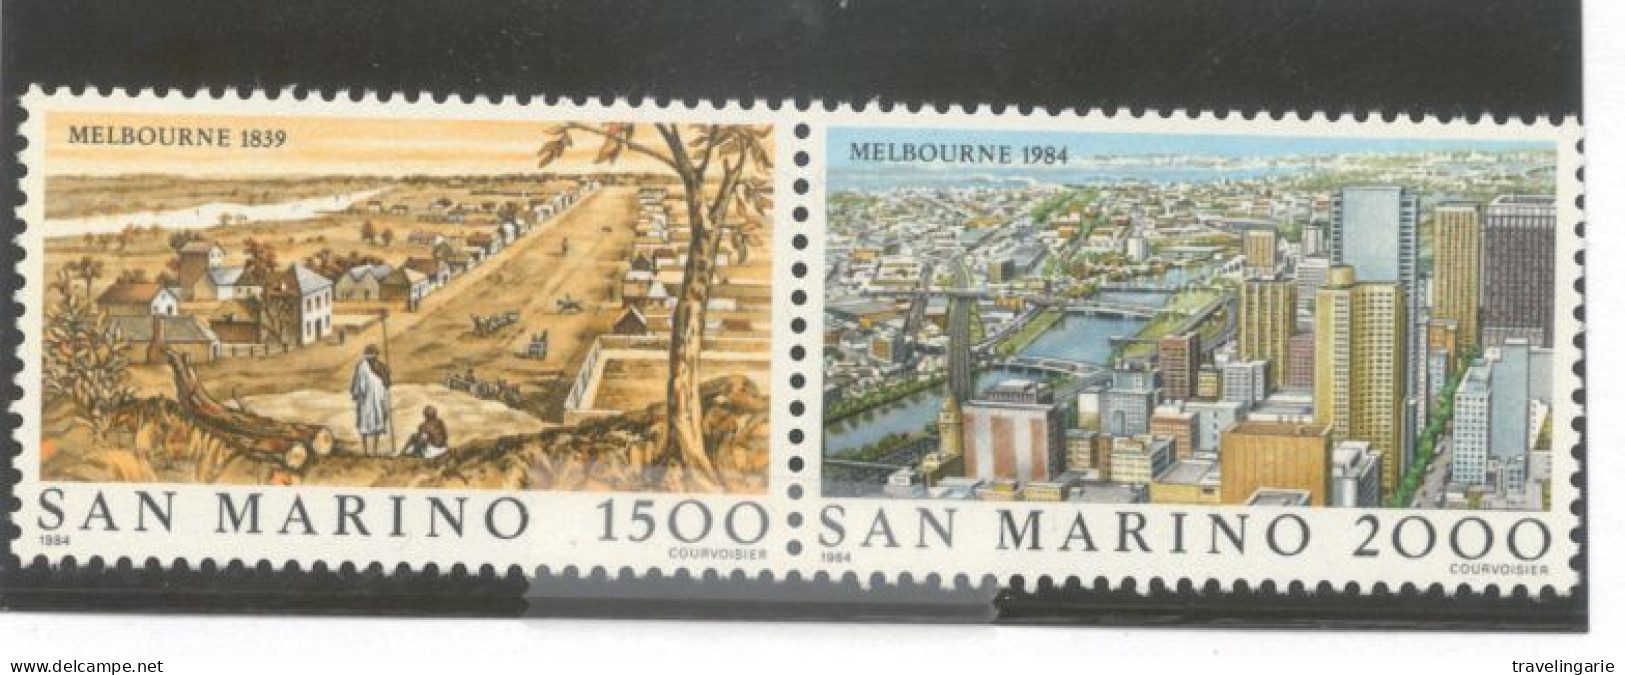 San Marino 1984 Famous Cities Melbourne MNH ** Se-tenant Pair - Ongebruikt